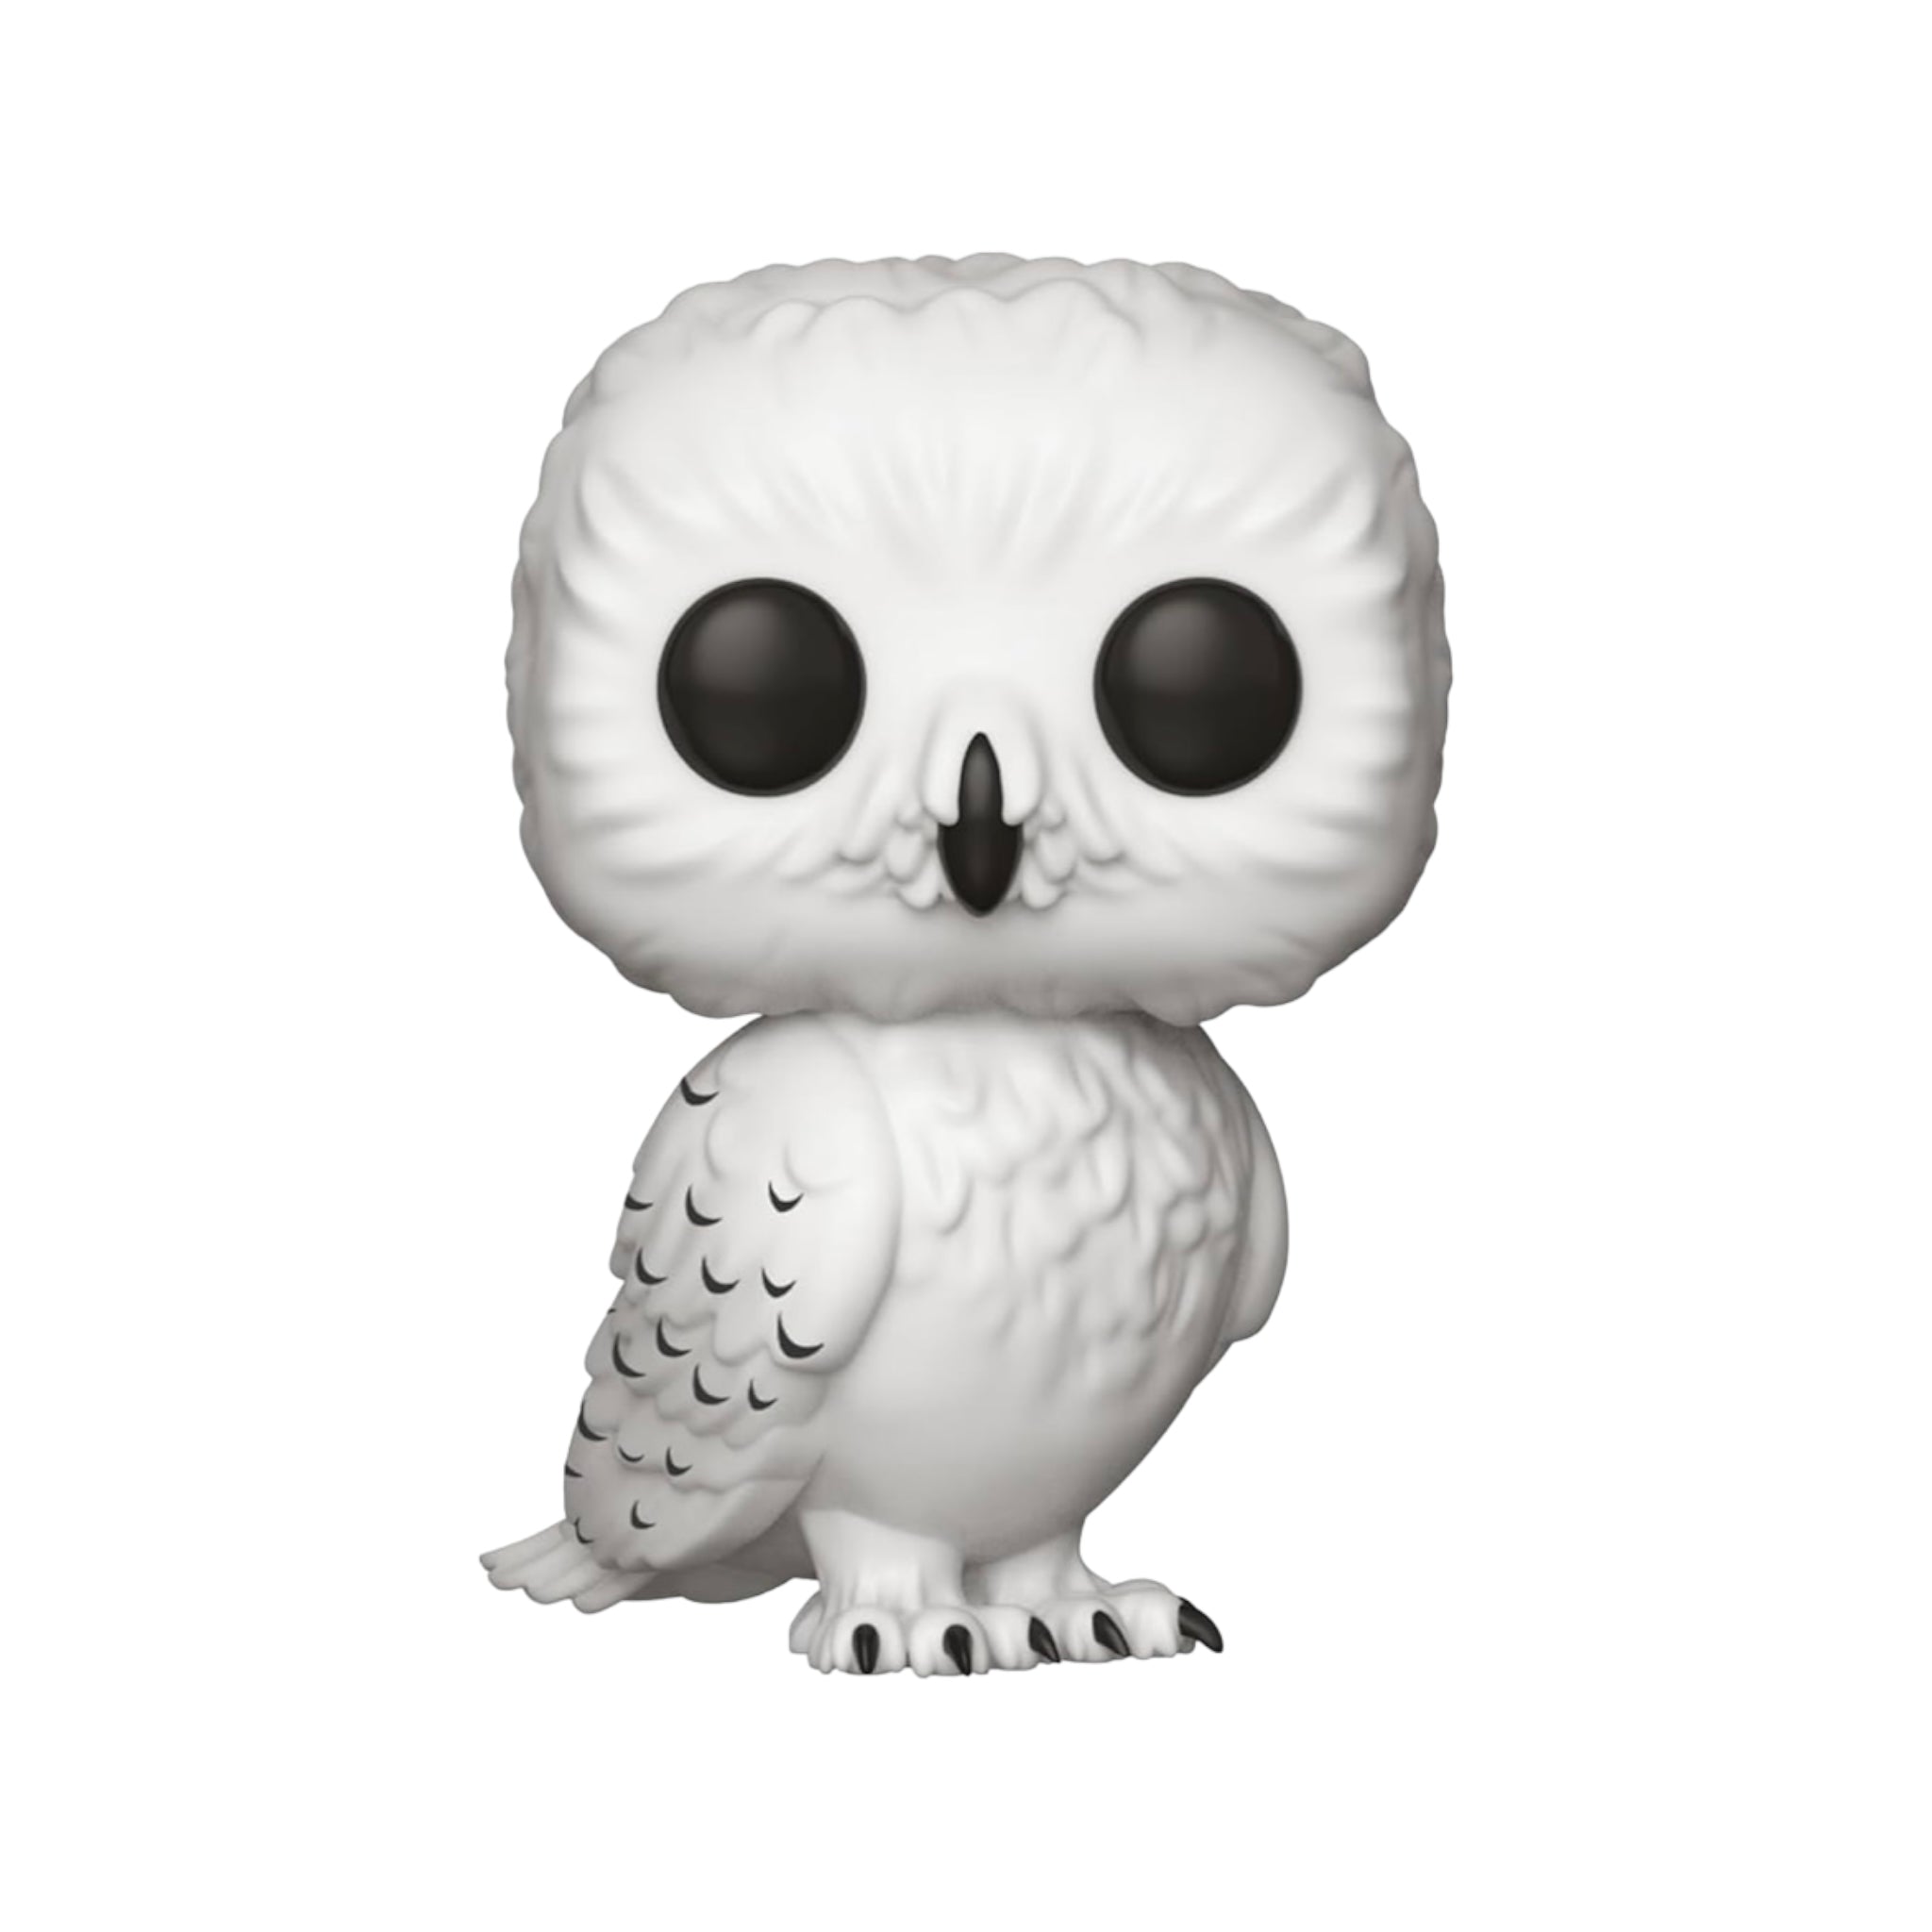 Hedwig #76 Funko Pop! - Harry Potter